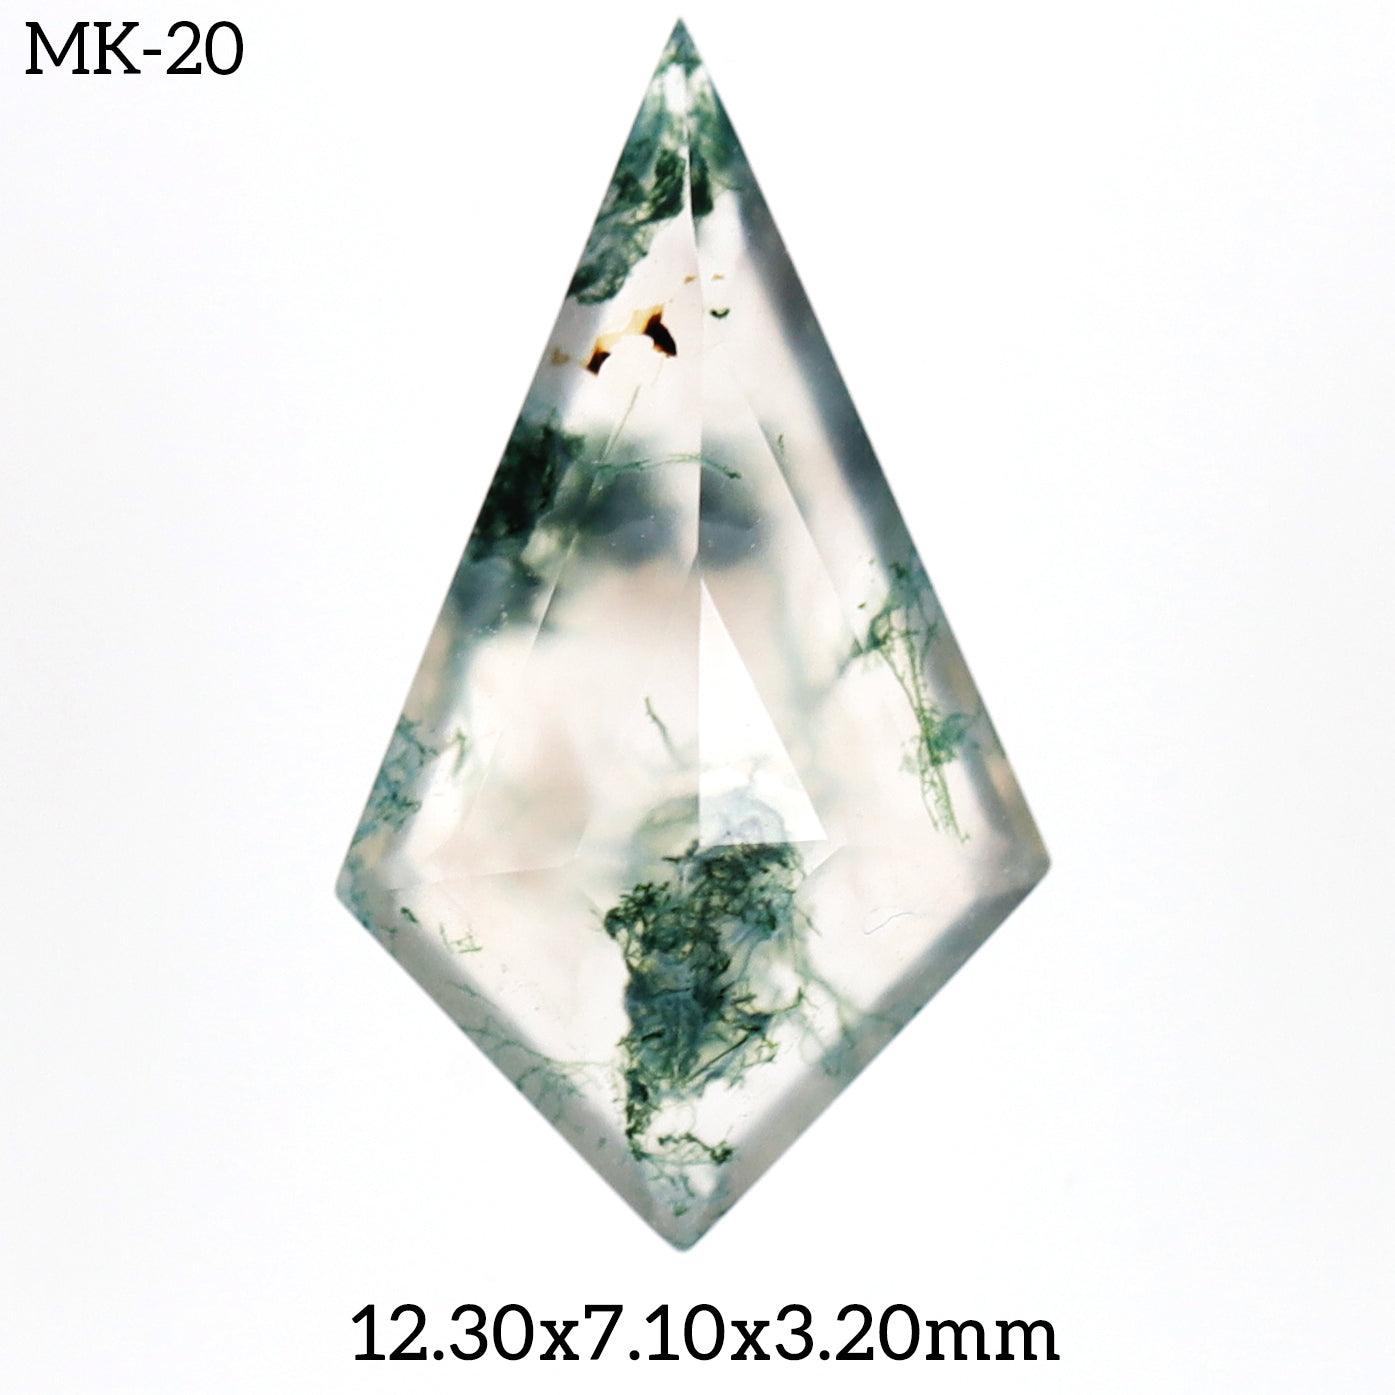 MK - 20 Moss Agate Kite Gemstone - Rubysta